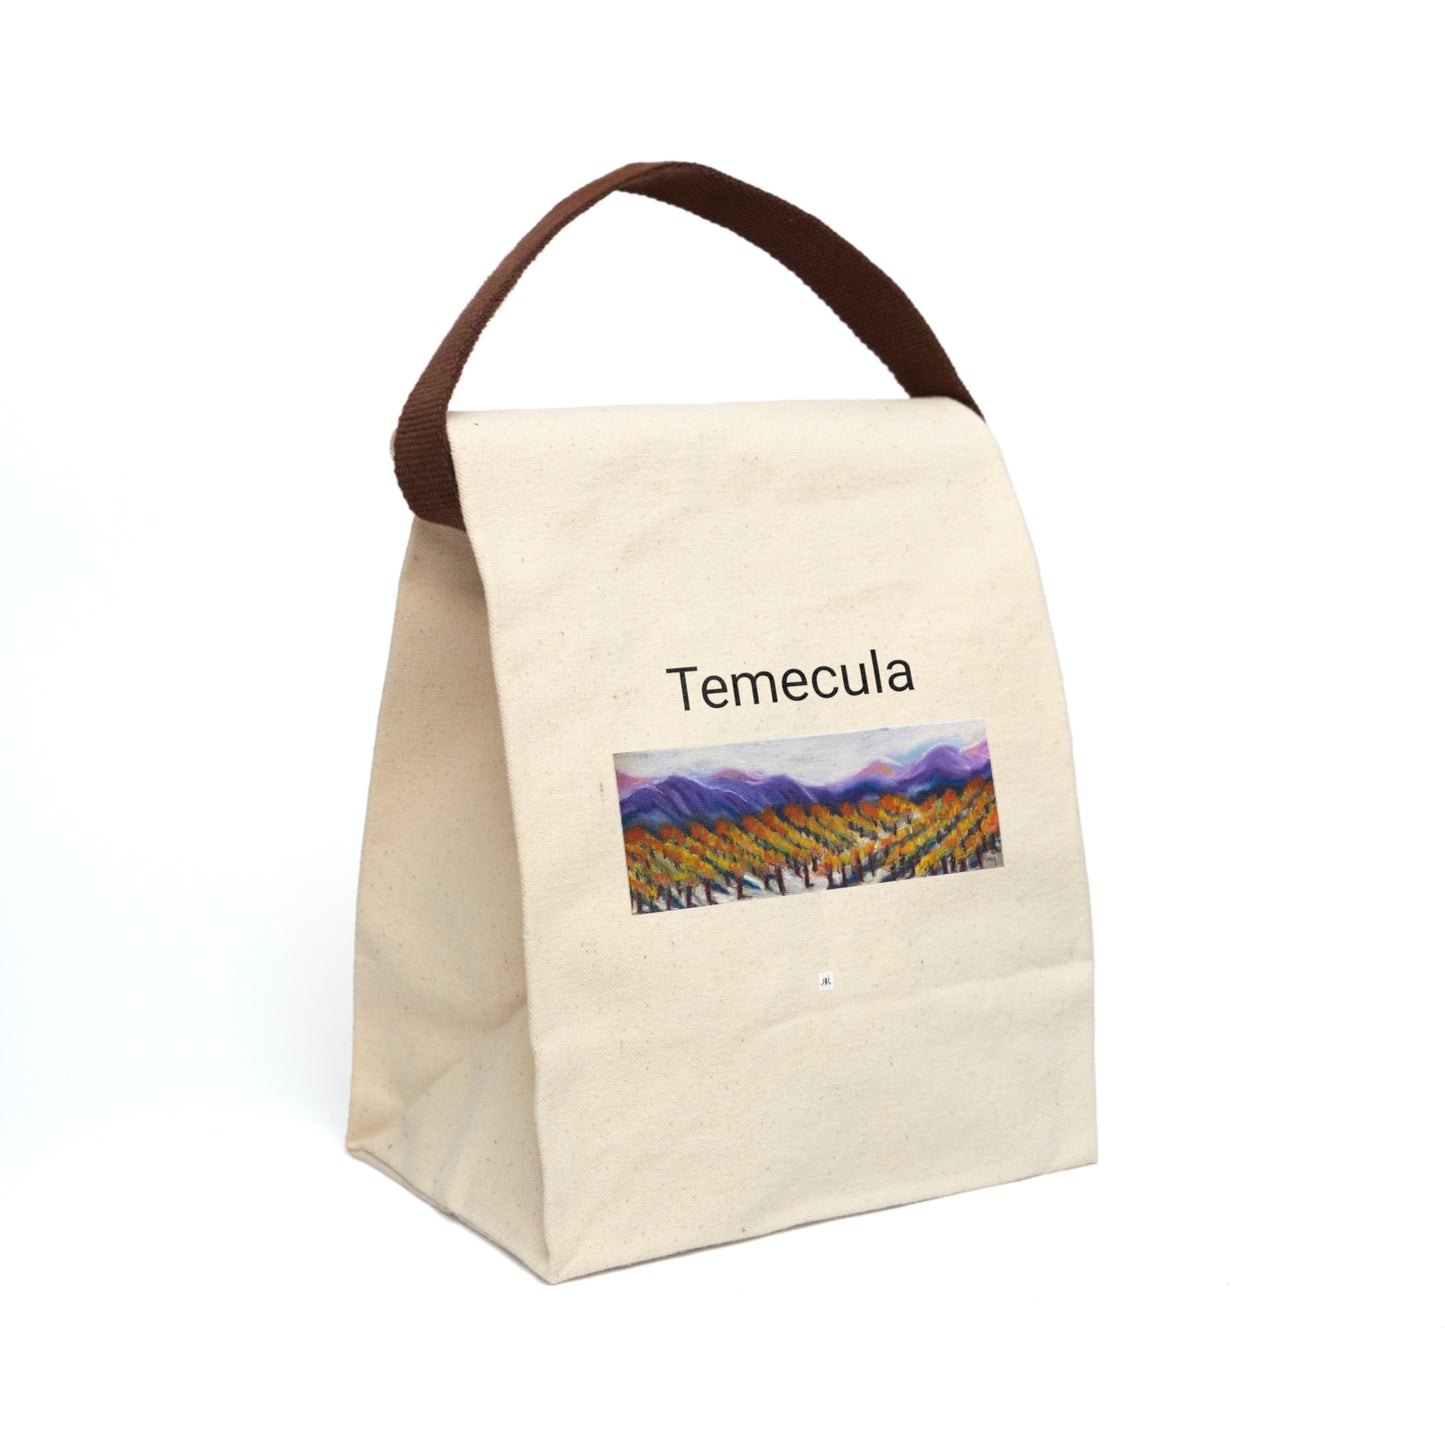 Misty Vines Temecula Souvenir Canvas Lunch Bag With Strap